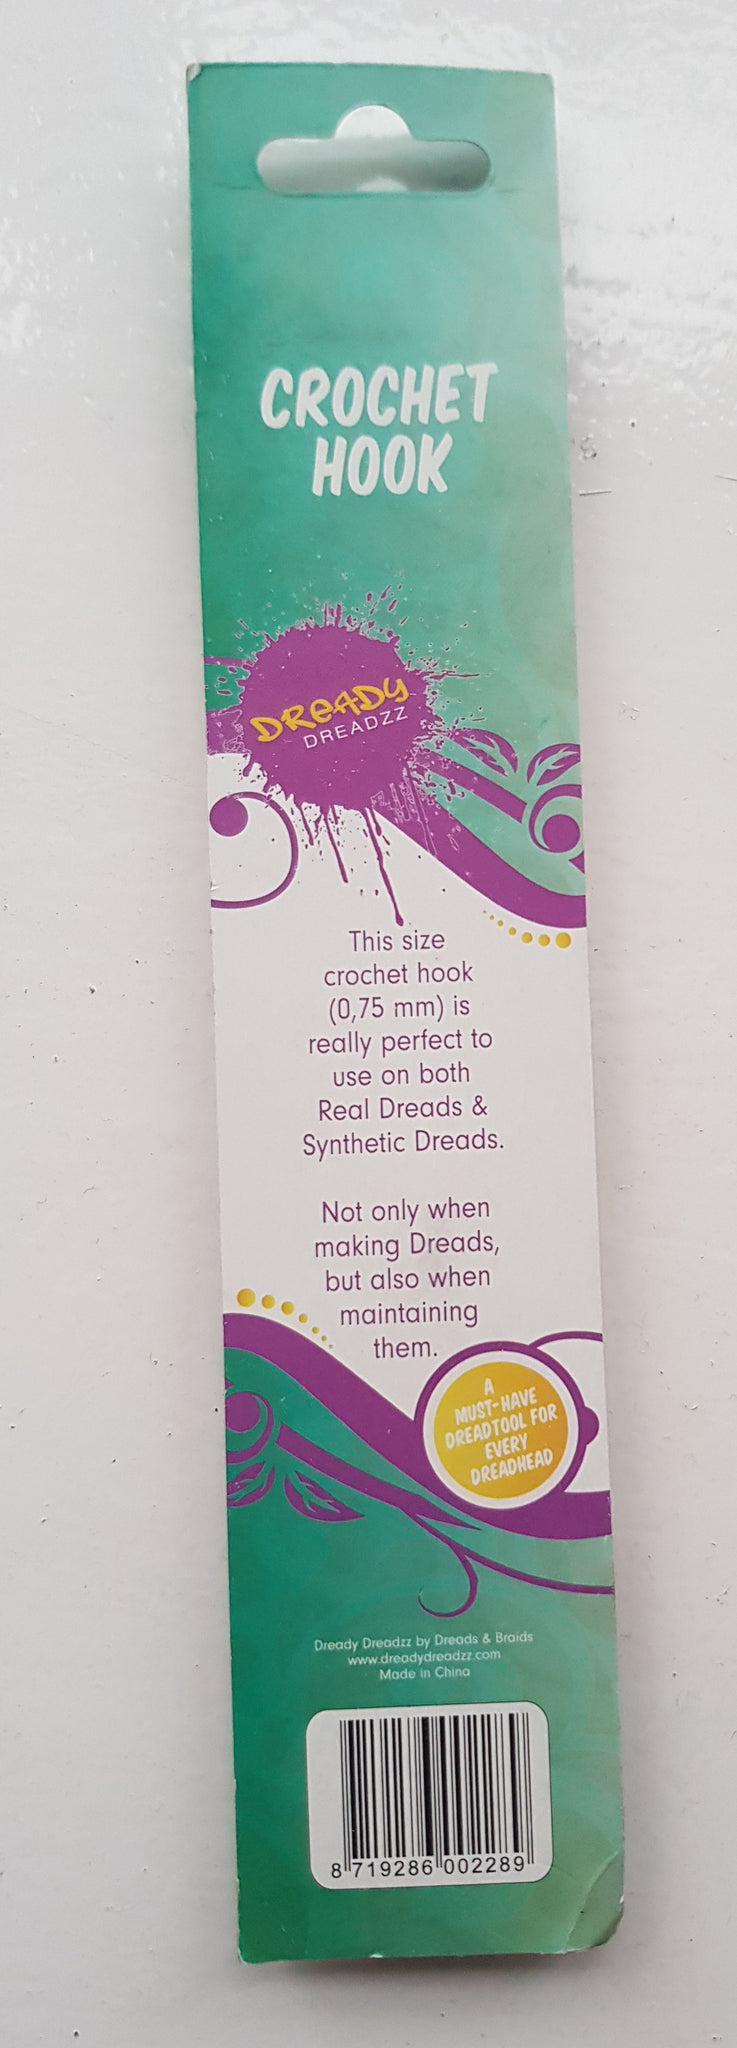 Dready Dreadzz - Dreadlocks Crochet Hook 0.75mm (Loose Hair Fixing Too